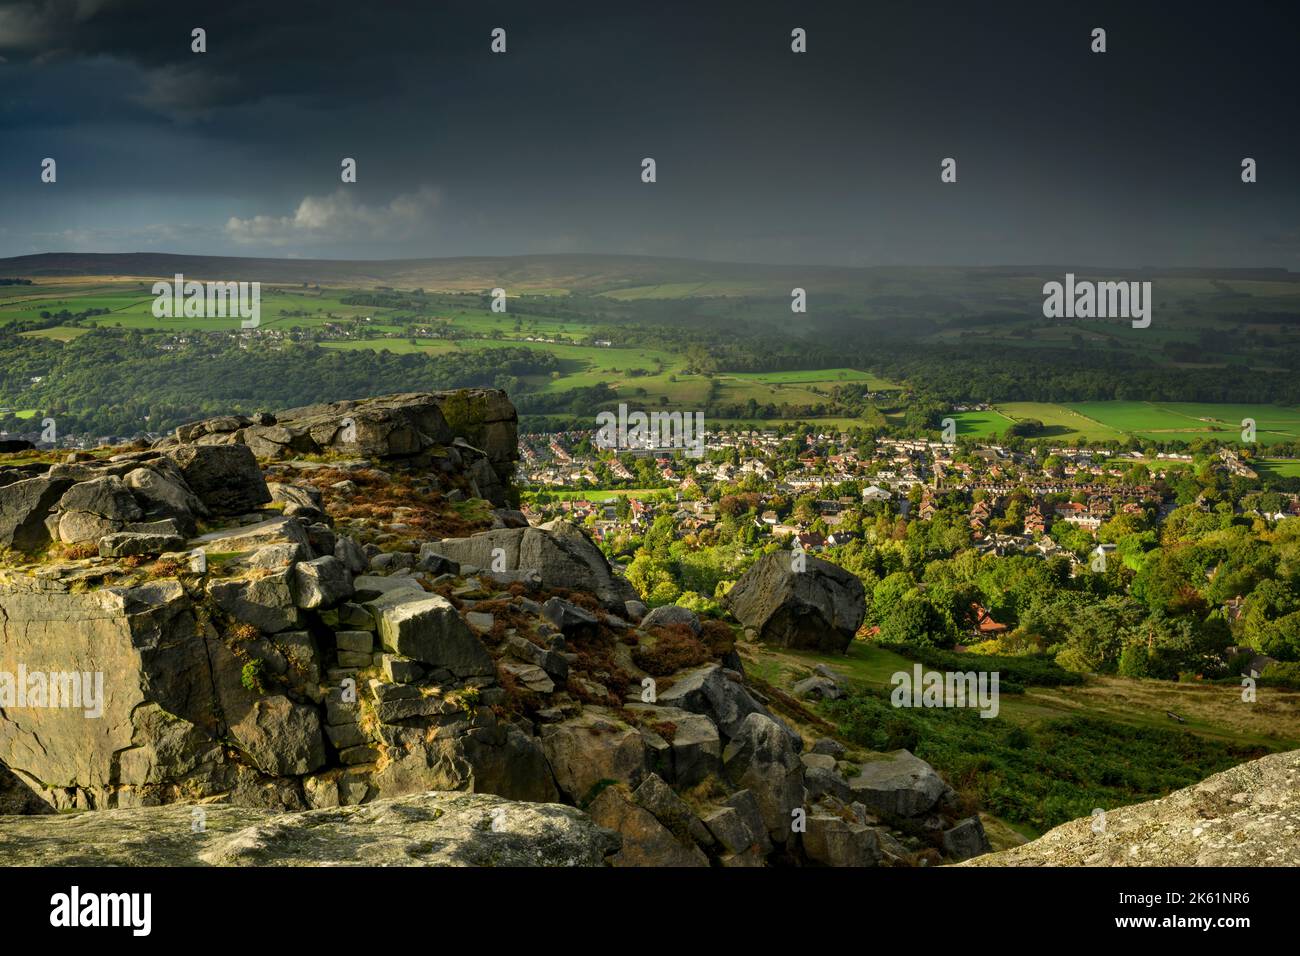 Cow & Calf Rocks overlooking scenic atmospheric rural landscape (high moorland hill crag, sun & raining) - Ilkley Moor, West Yorkshire, England, UK. Stock Photo